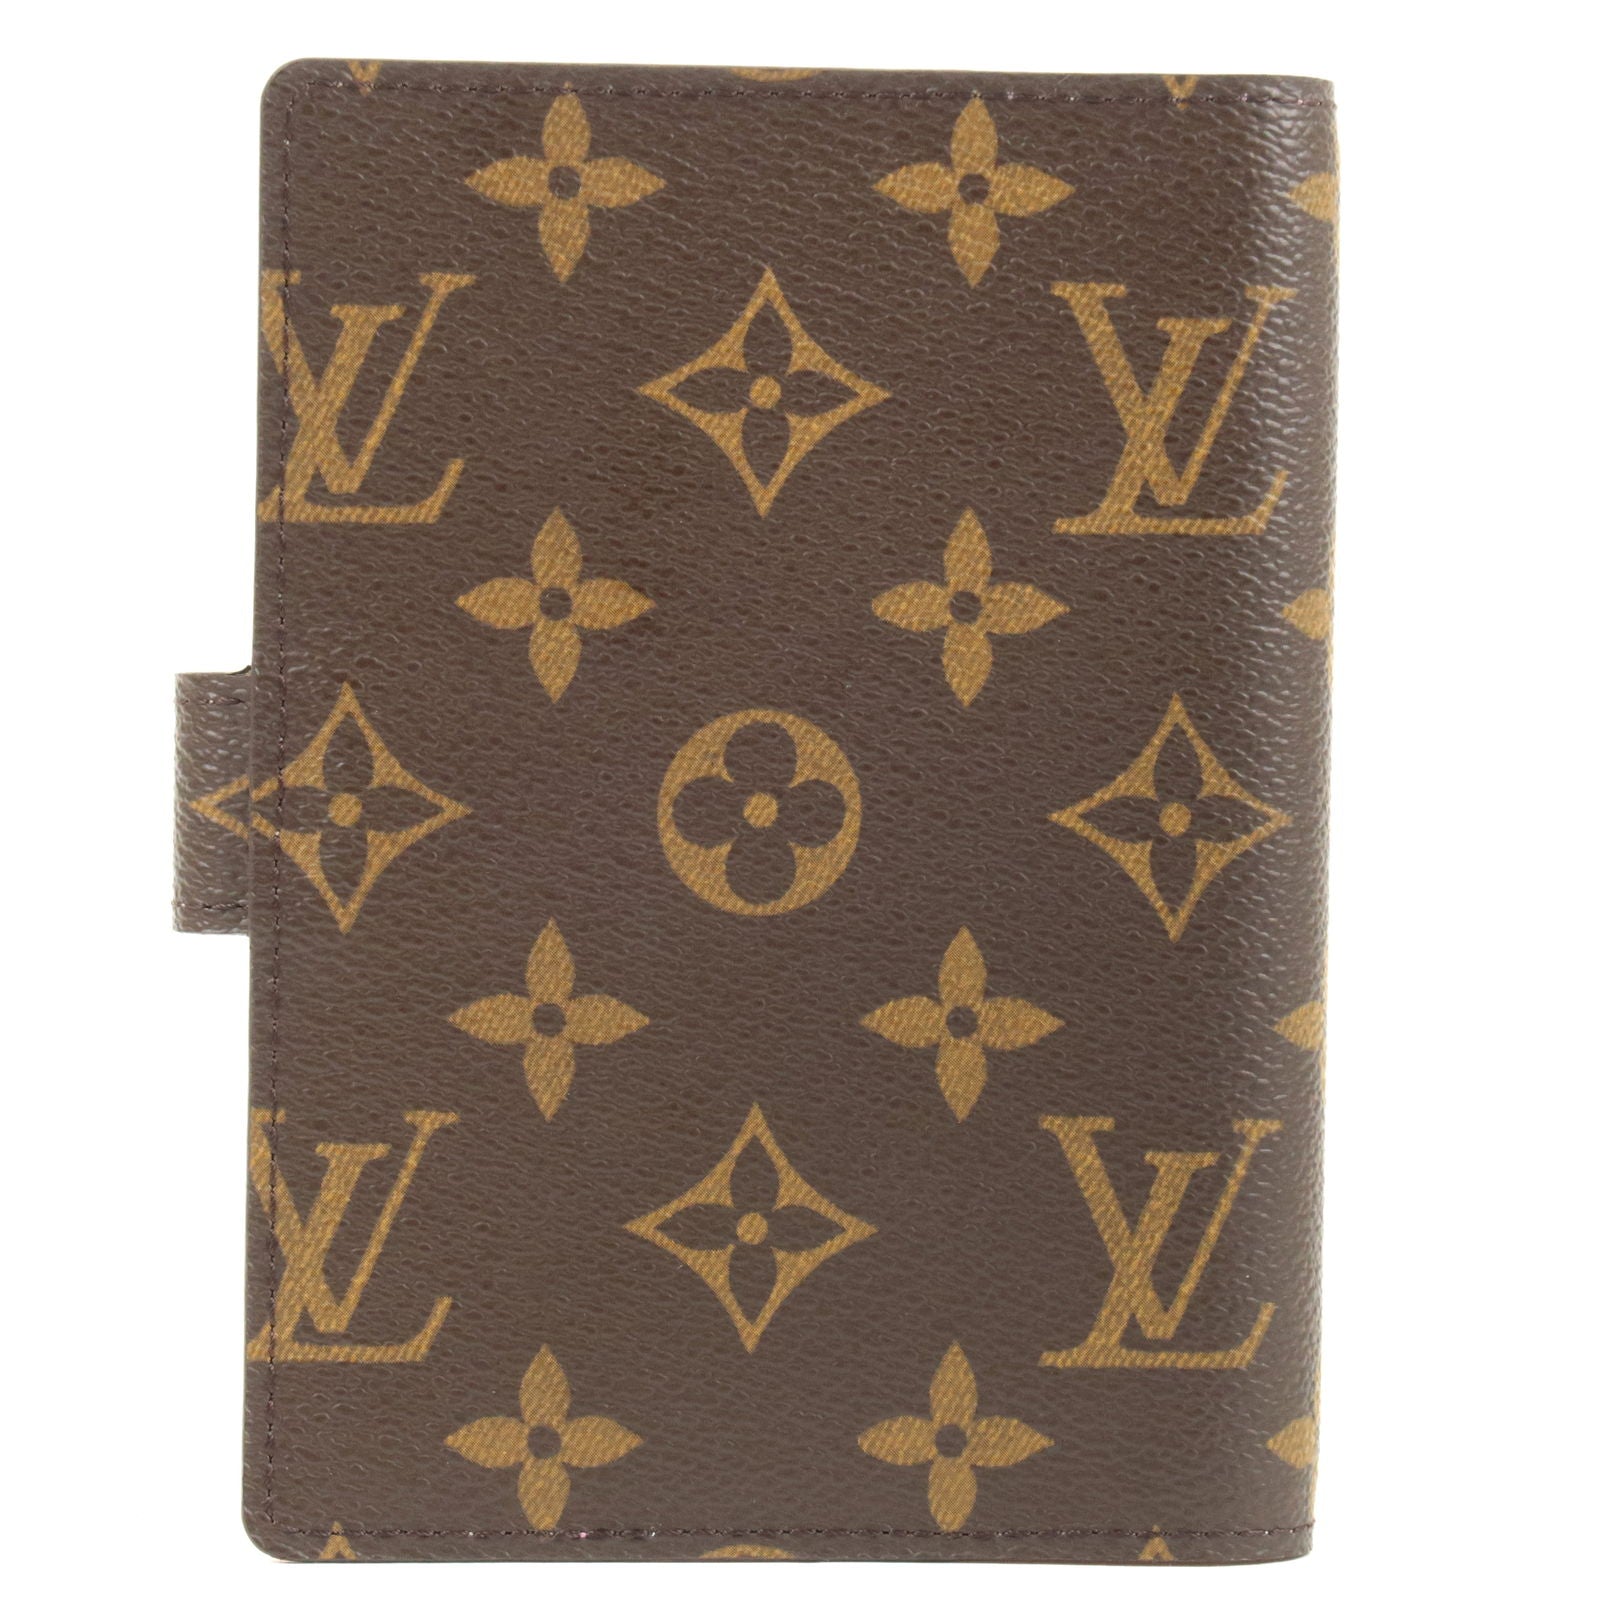 ep_vintage luxury Store - Louis - Agenda - Vuitton - Monogram